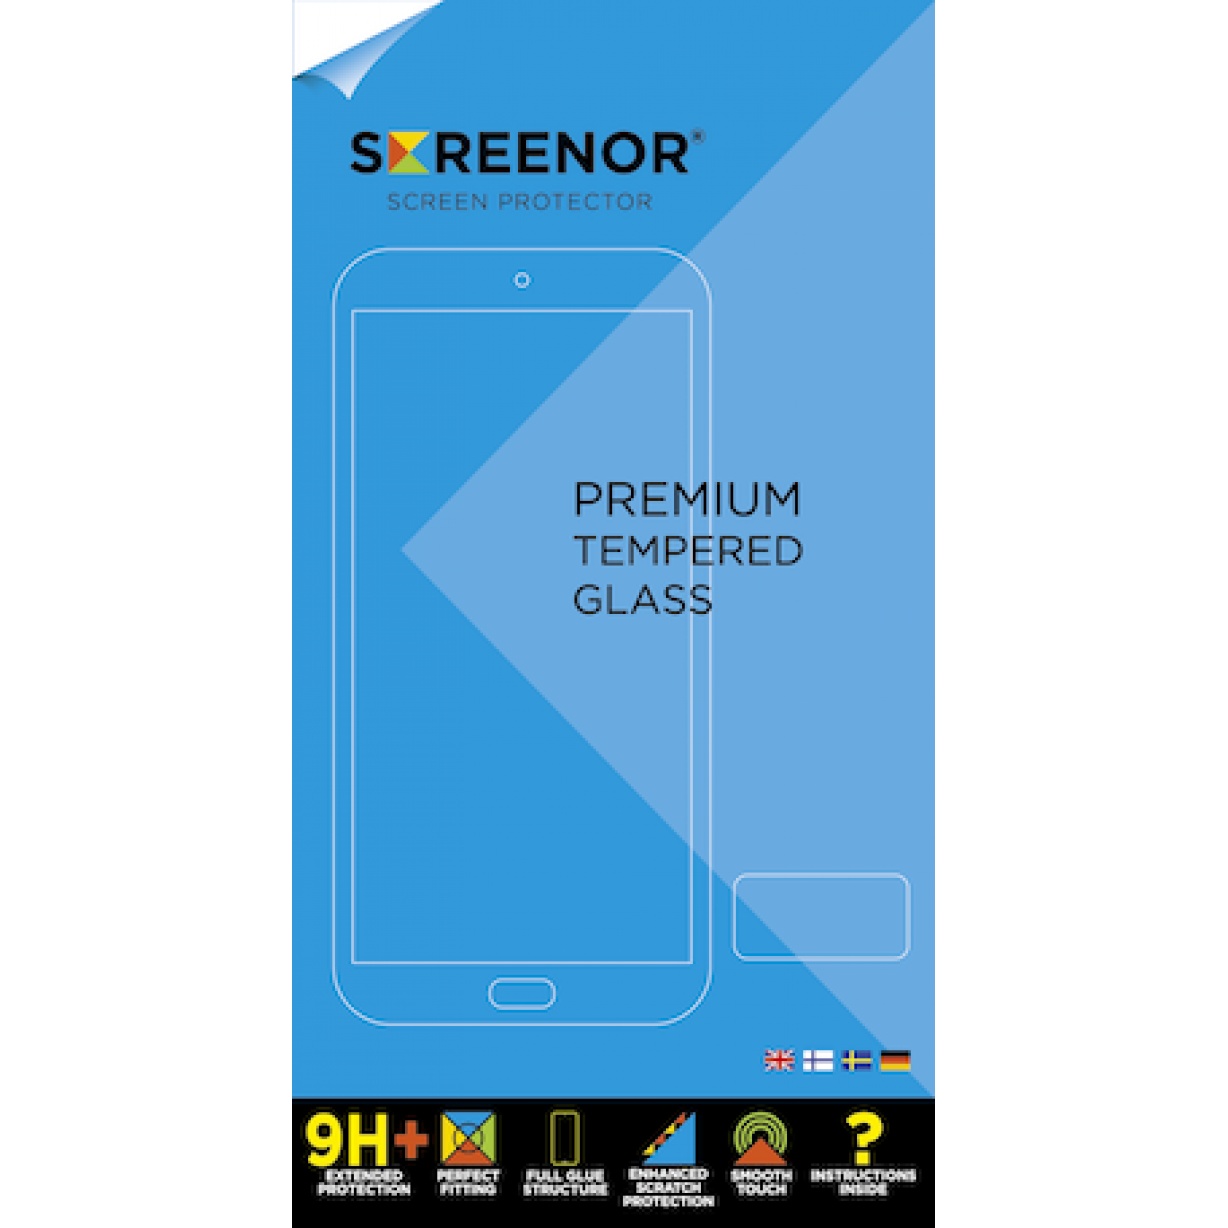 Apsauginis stiklas Screenor Premium Tempered Glass Sony Xperia X